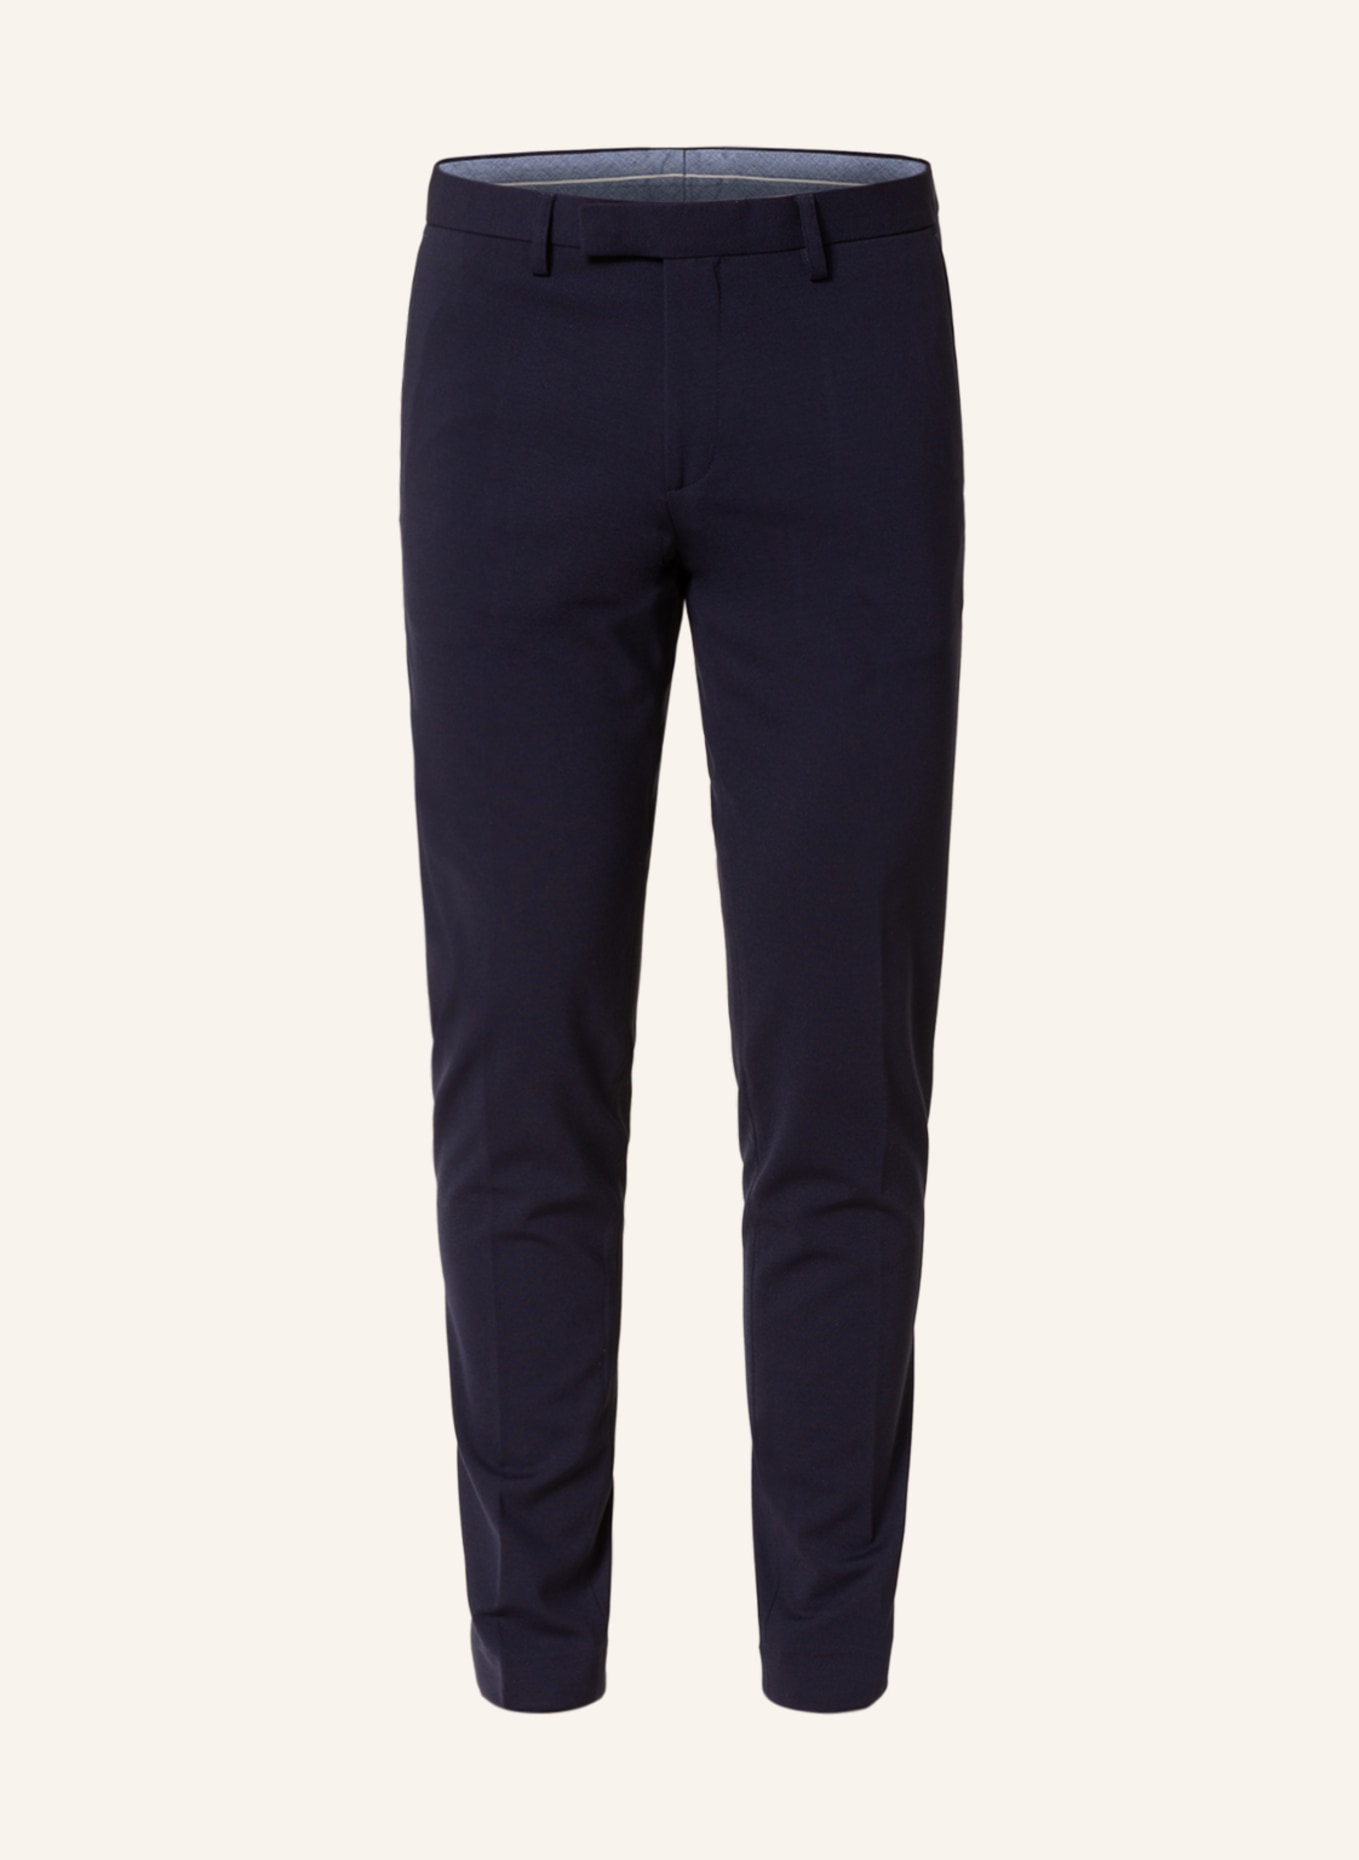 PAUL Anzughose Extra Slim Fit, Farbe: 670 DARK BLUE (Bild 1)